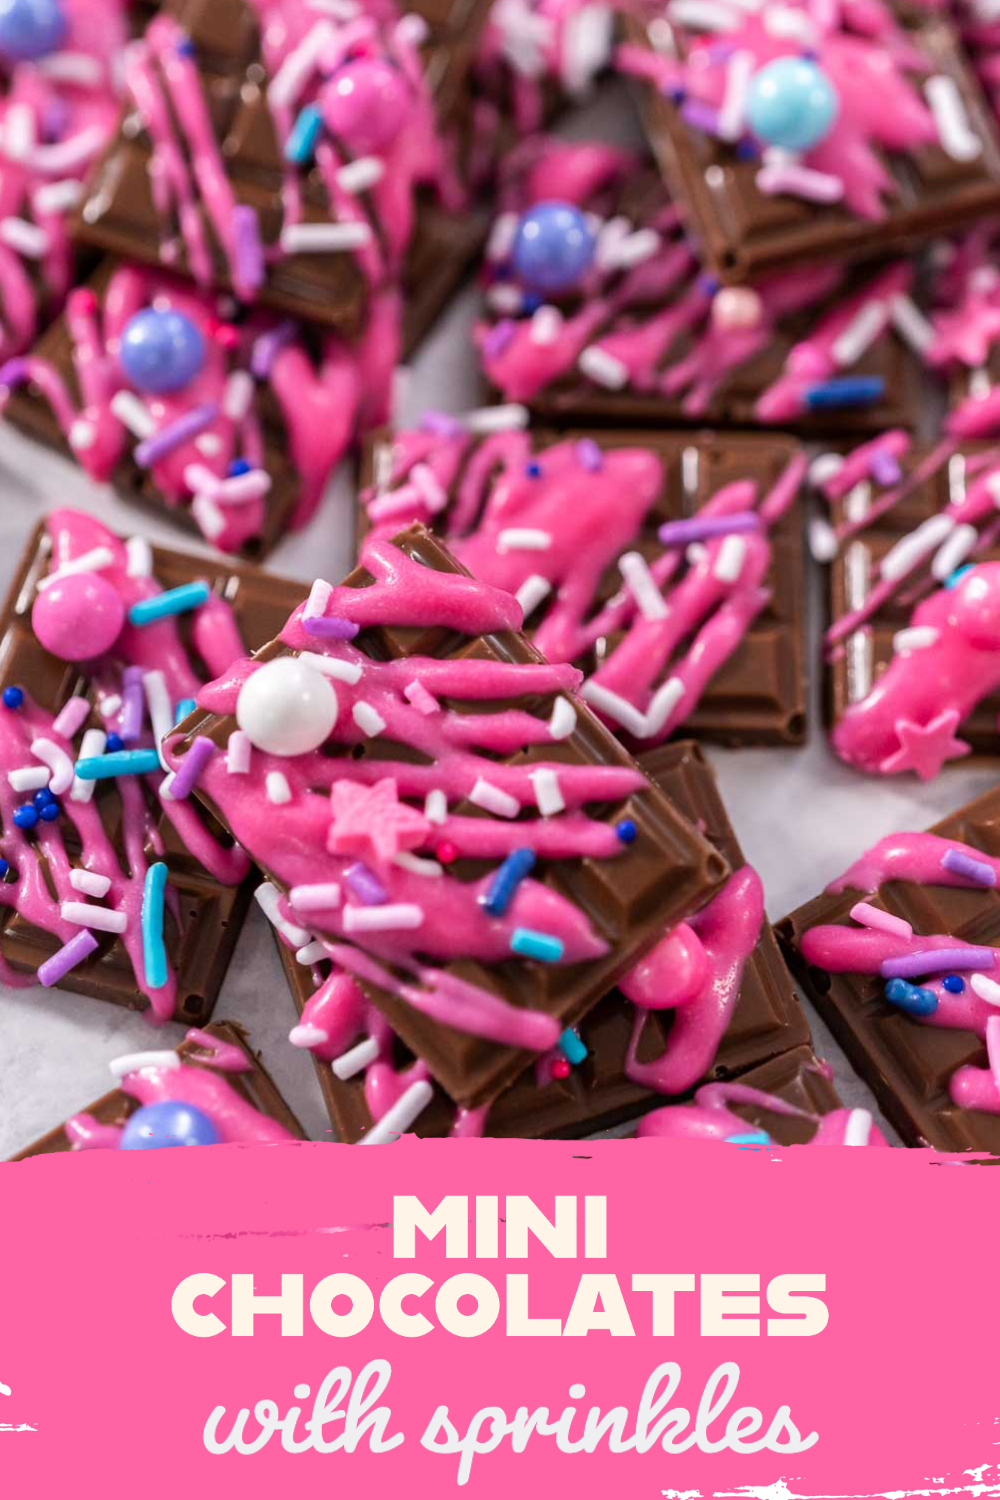 Mini chocolates with sprinkles